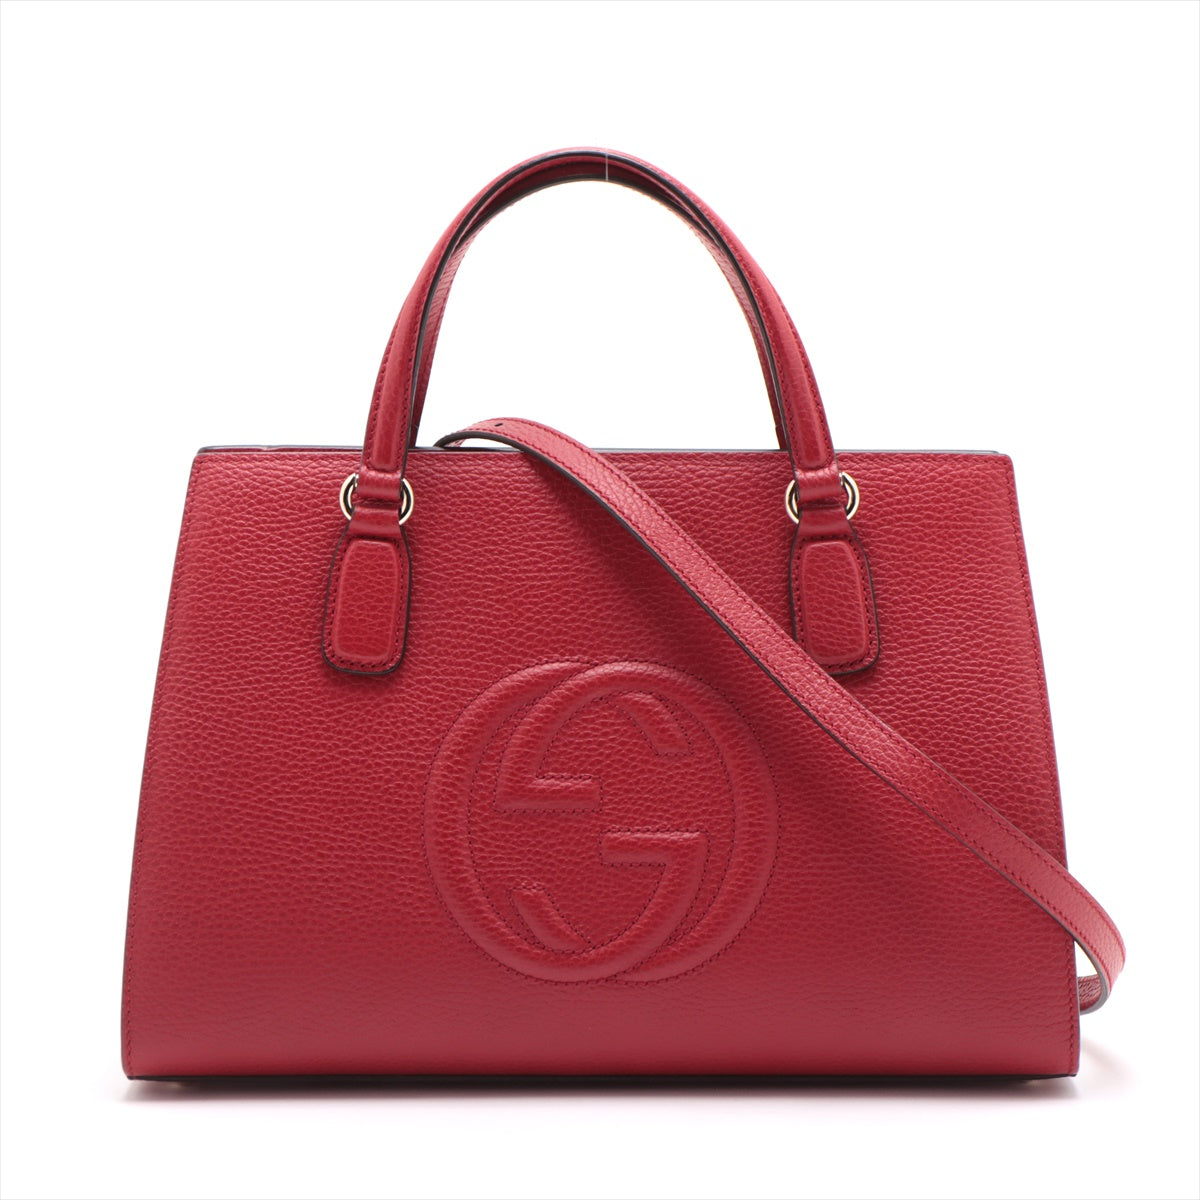 Gucci Soho皮革2WAY手提包 紅色431571